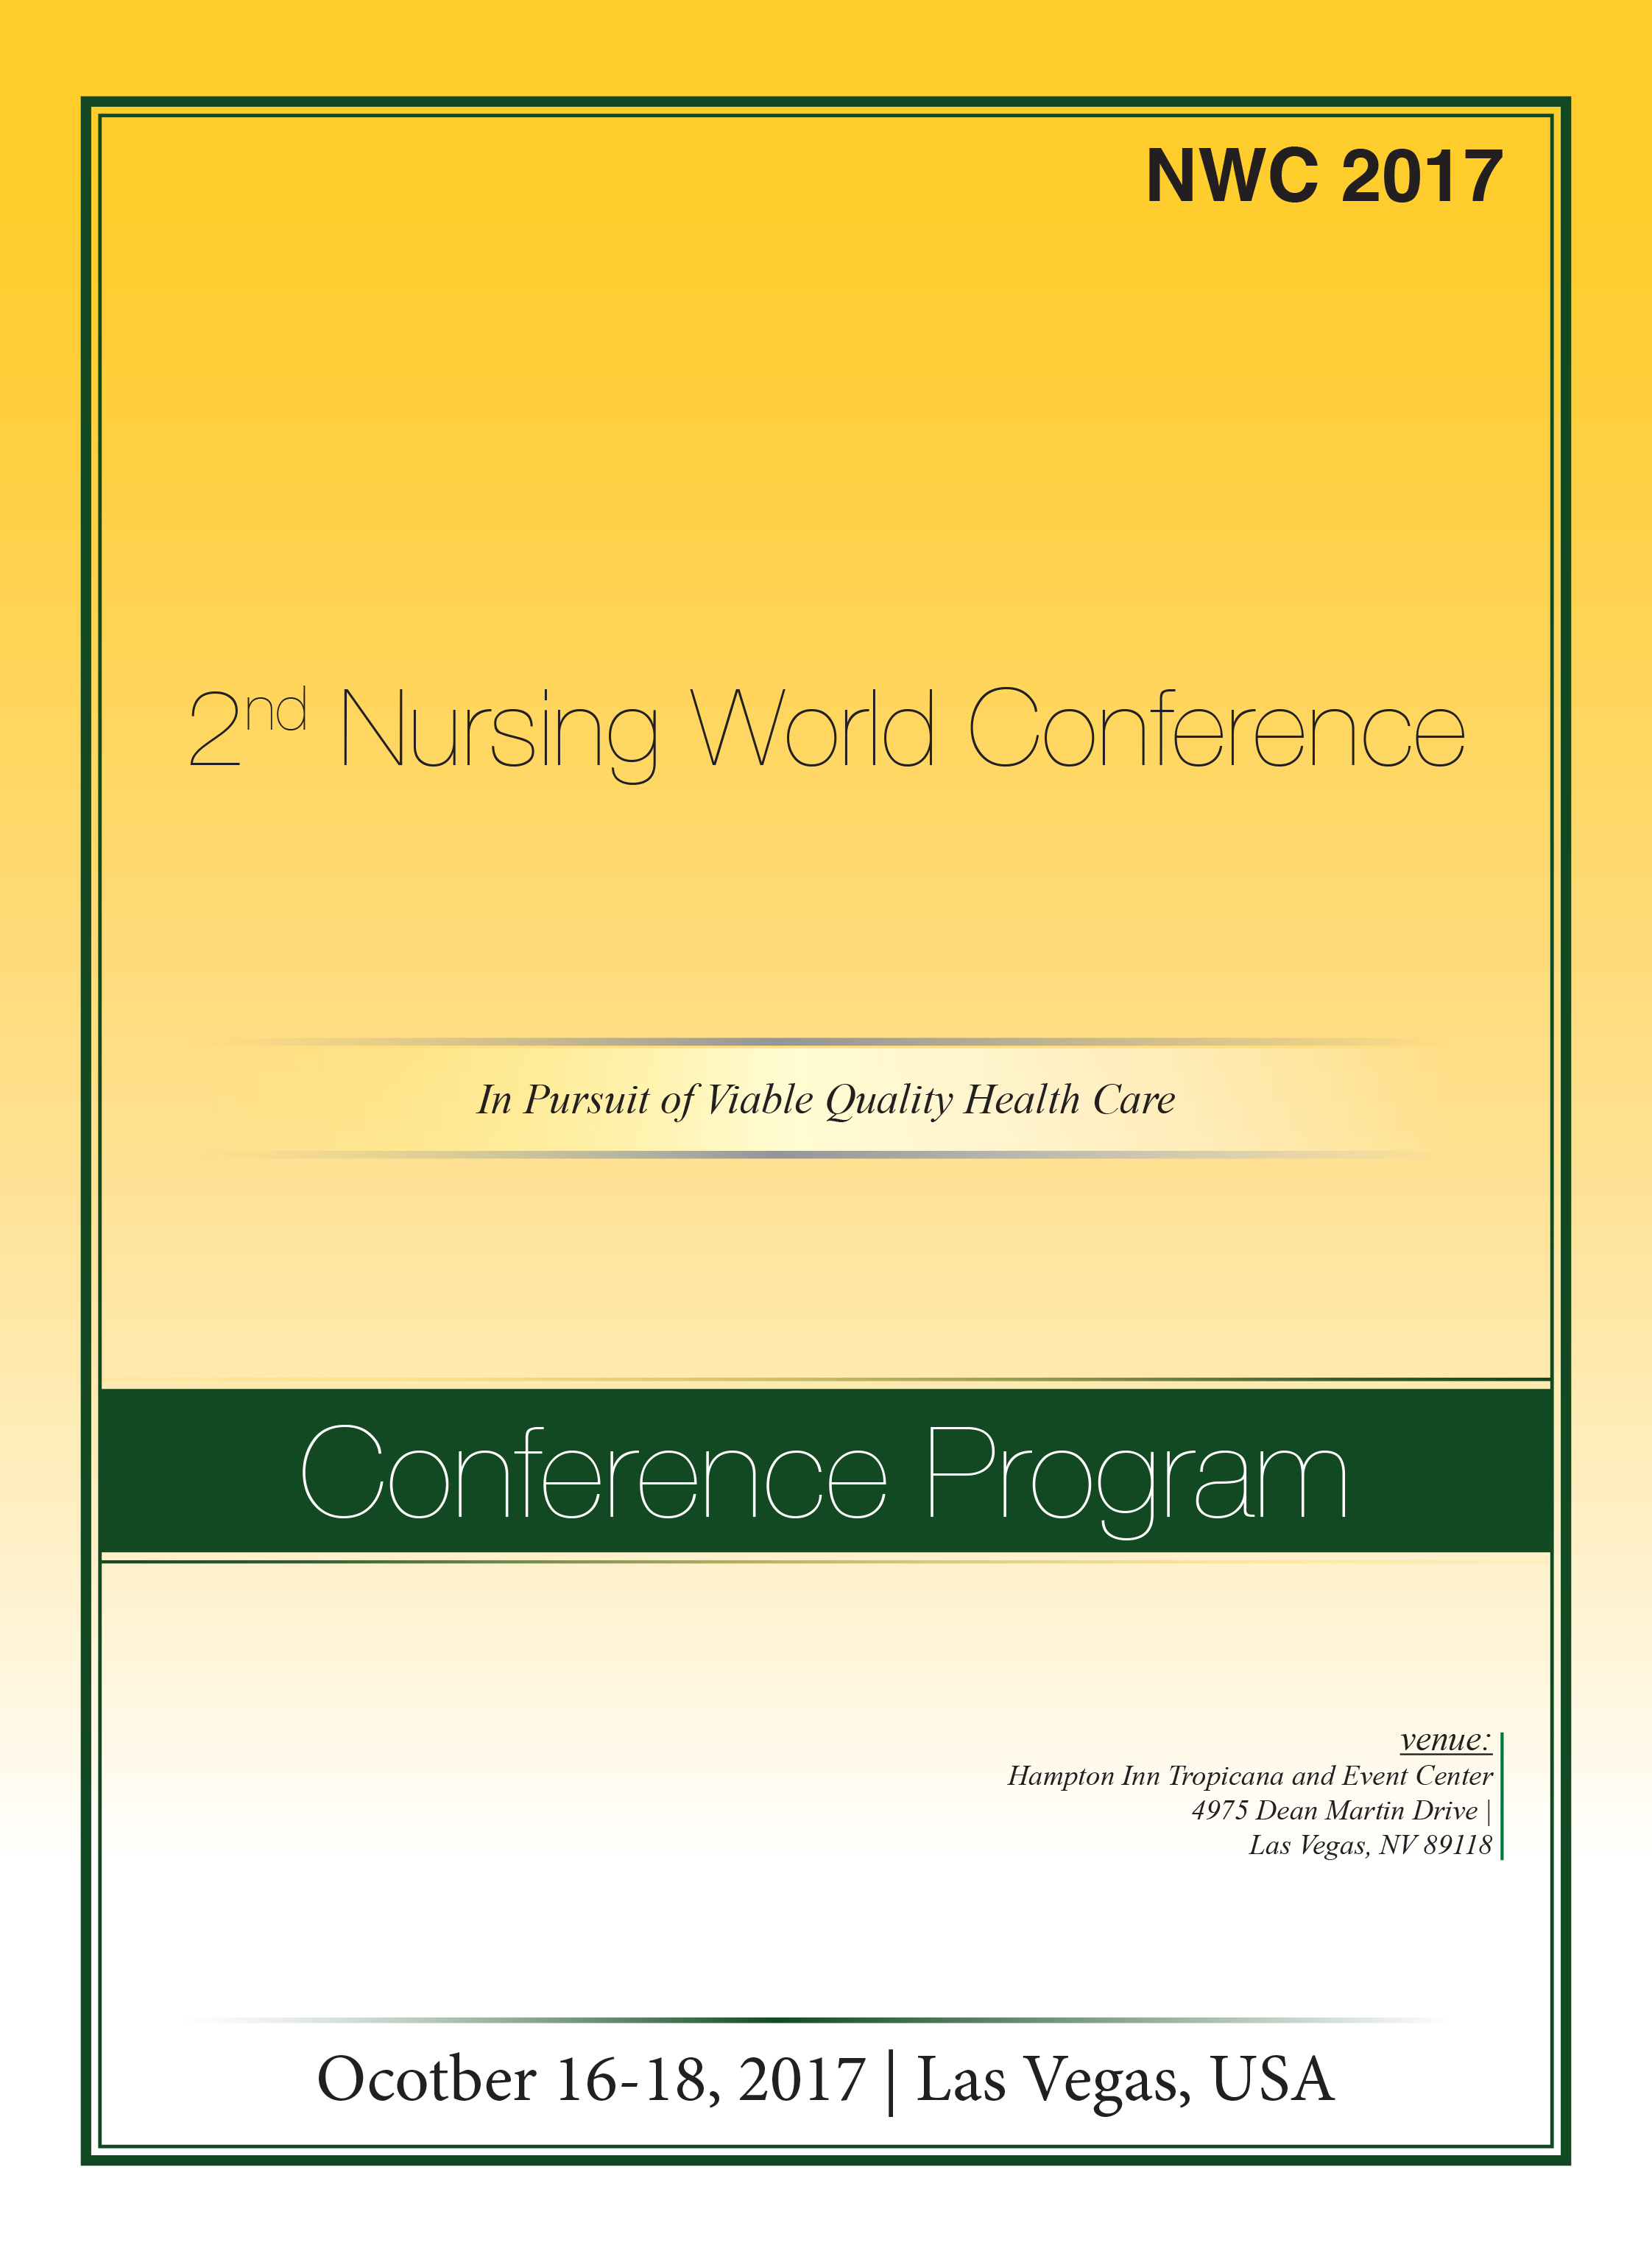 2nd Nursing World Conference | Las Vegas, USA Program